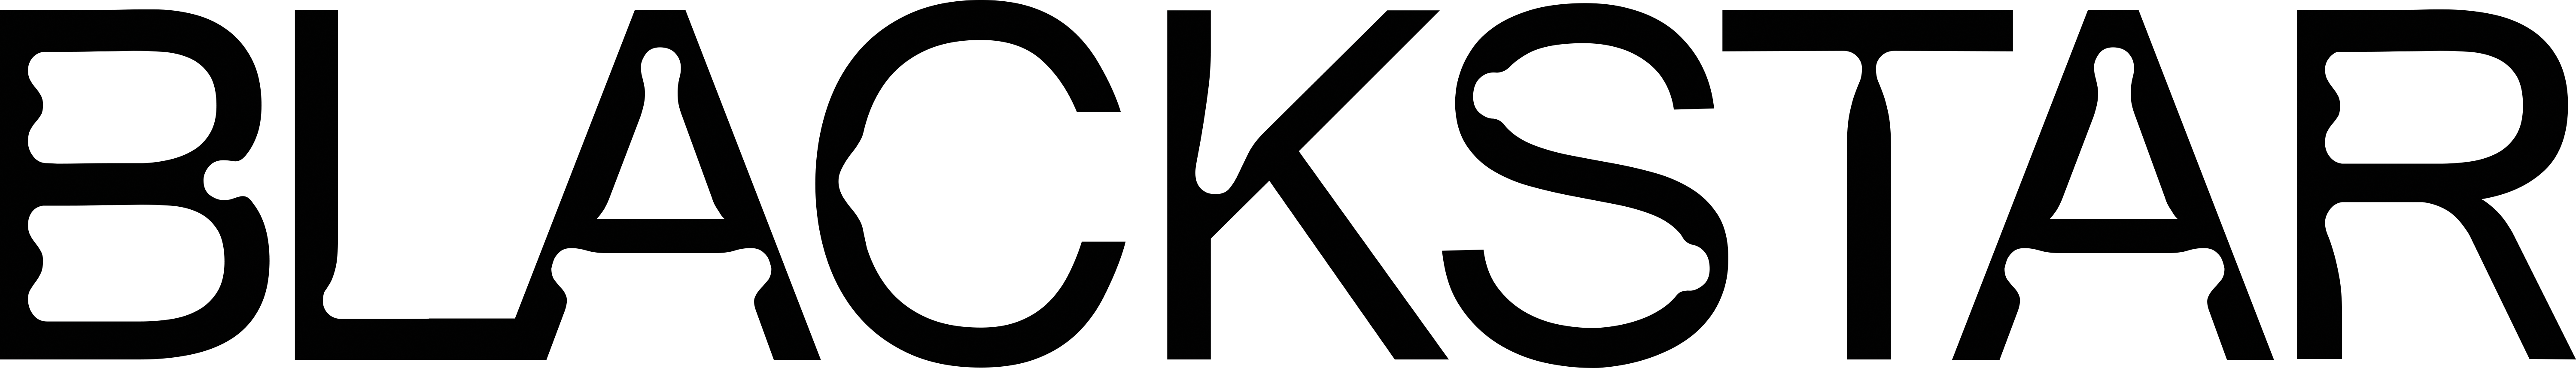 Blackstar logo in black text